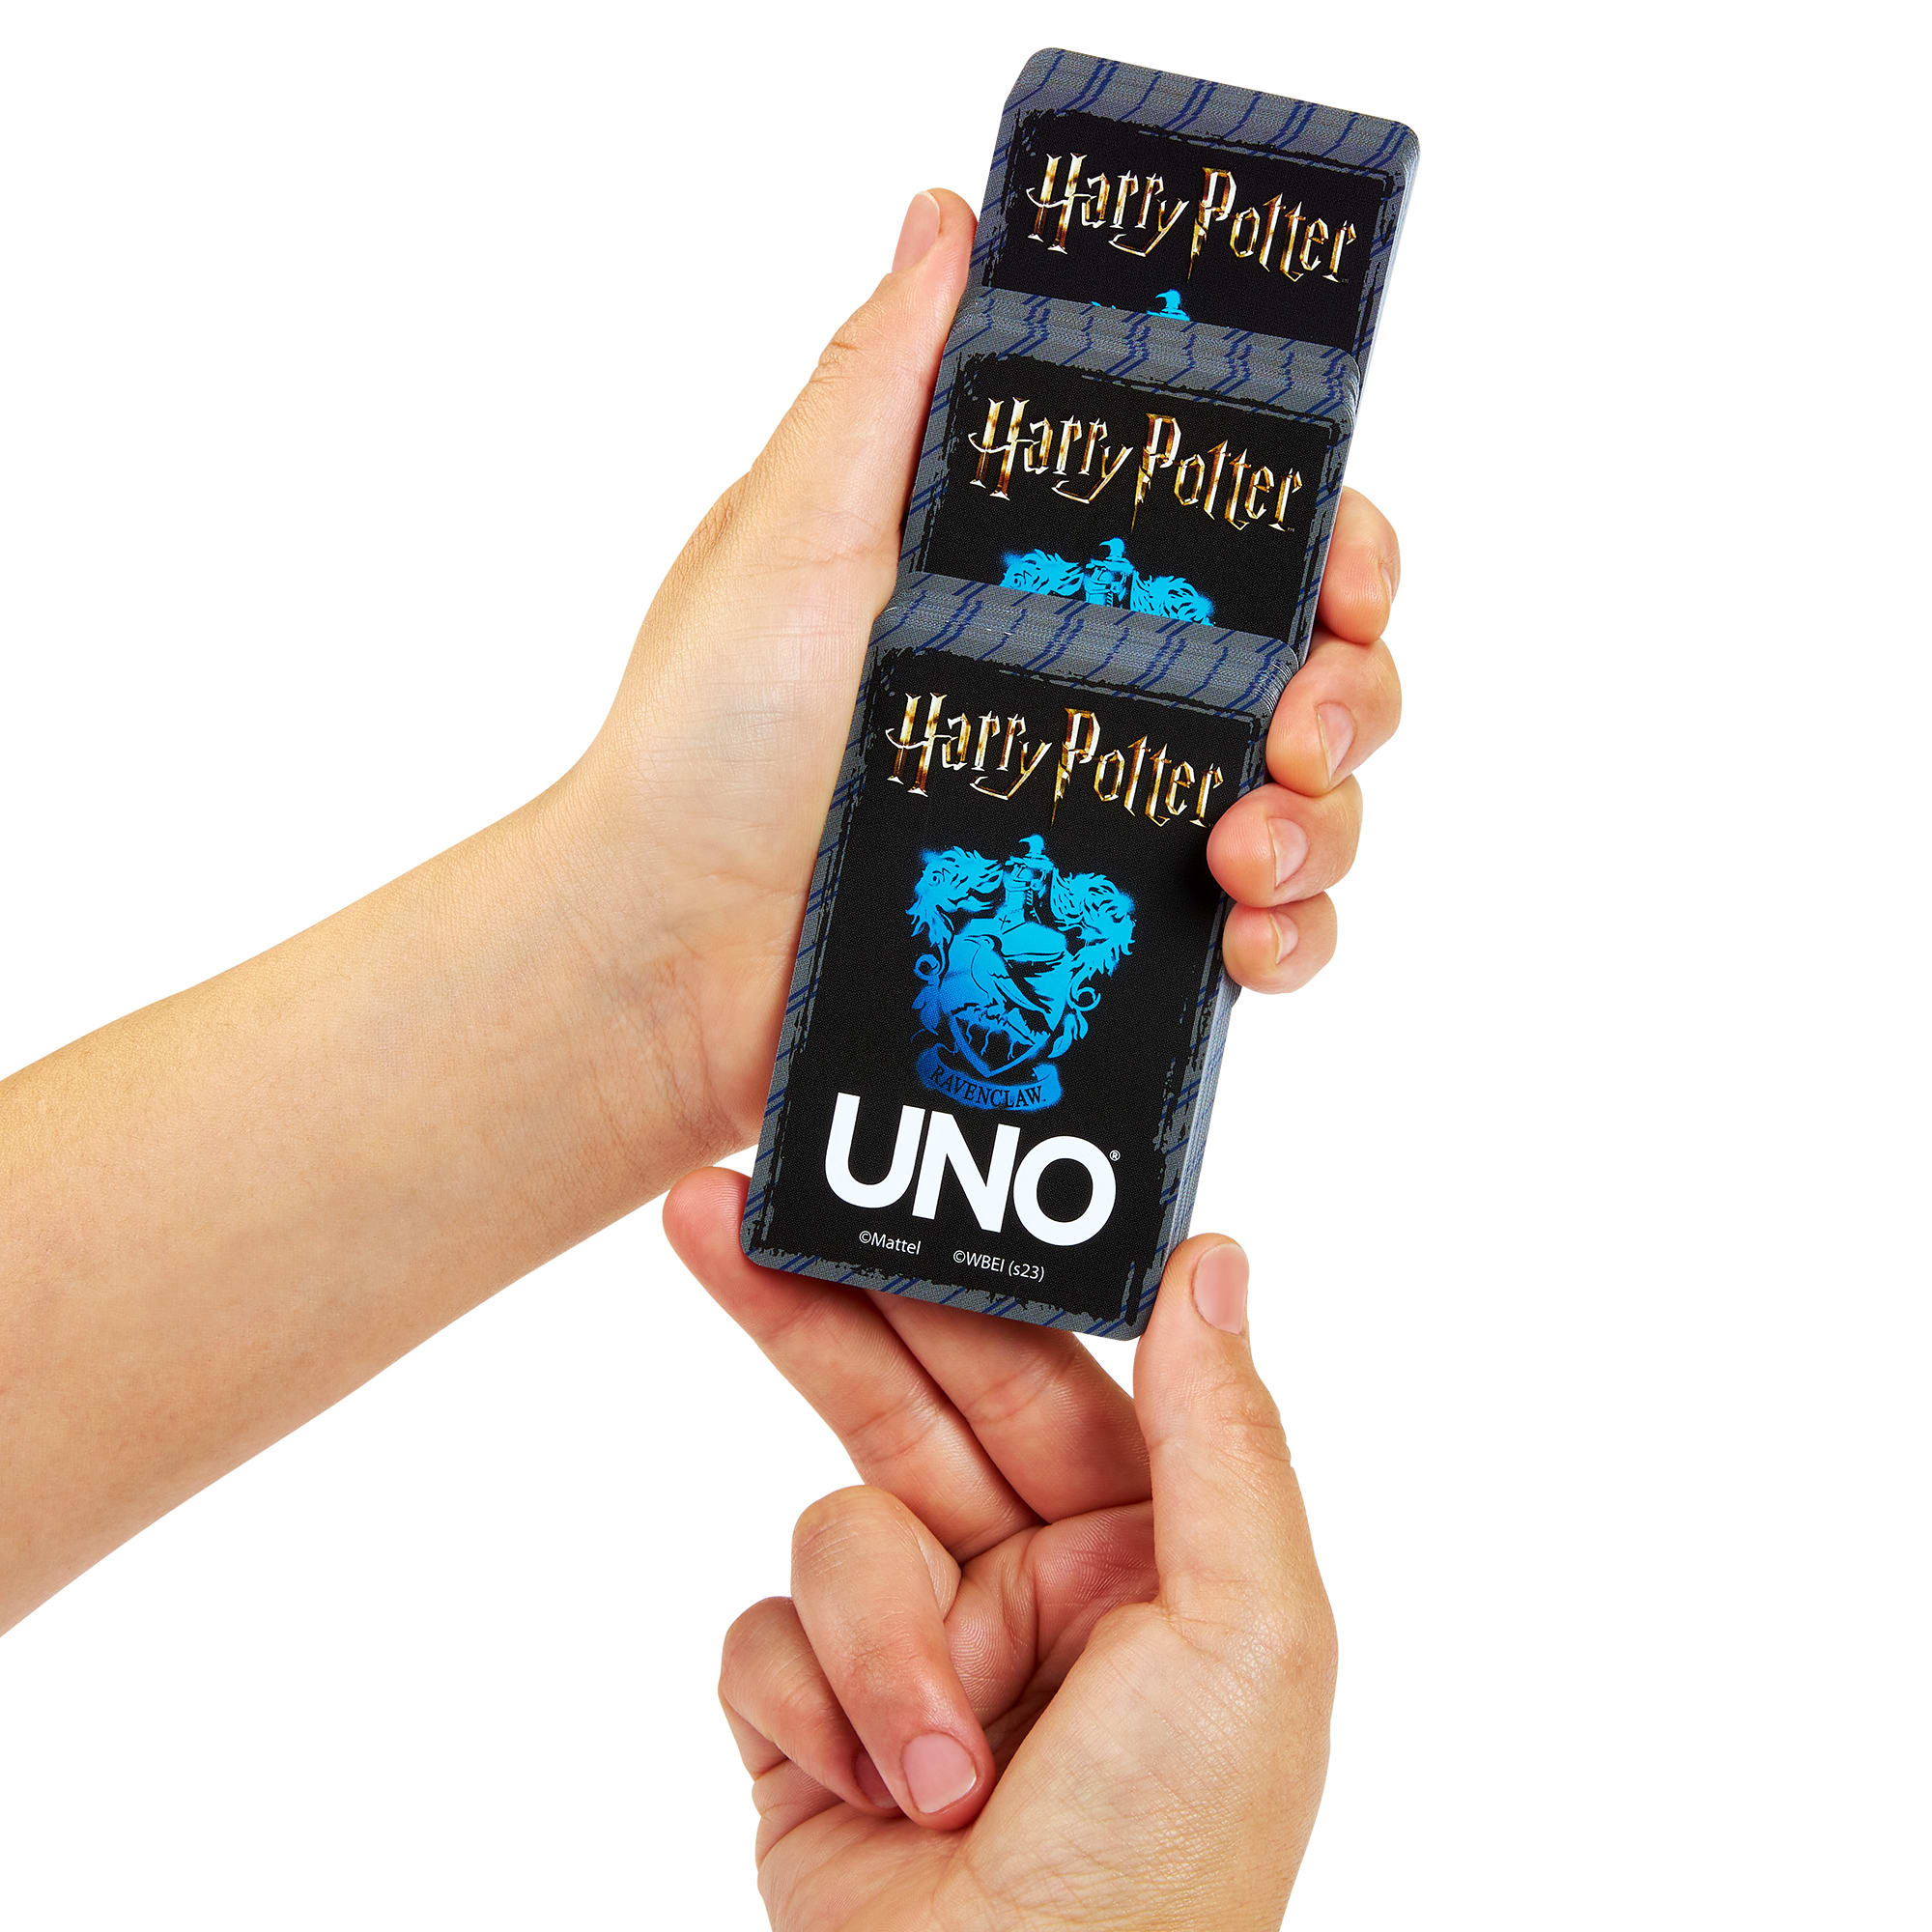 UNO Fandom Harry Potter Ravenclaw Game Deck